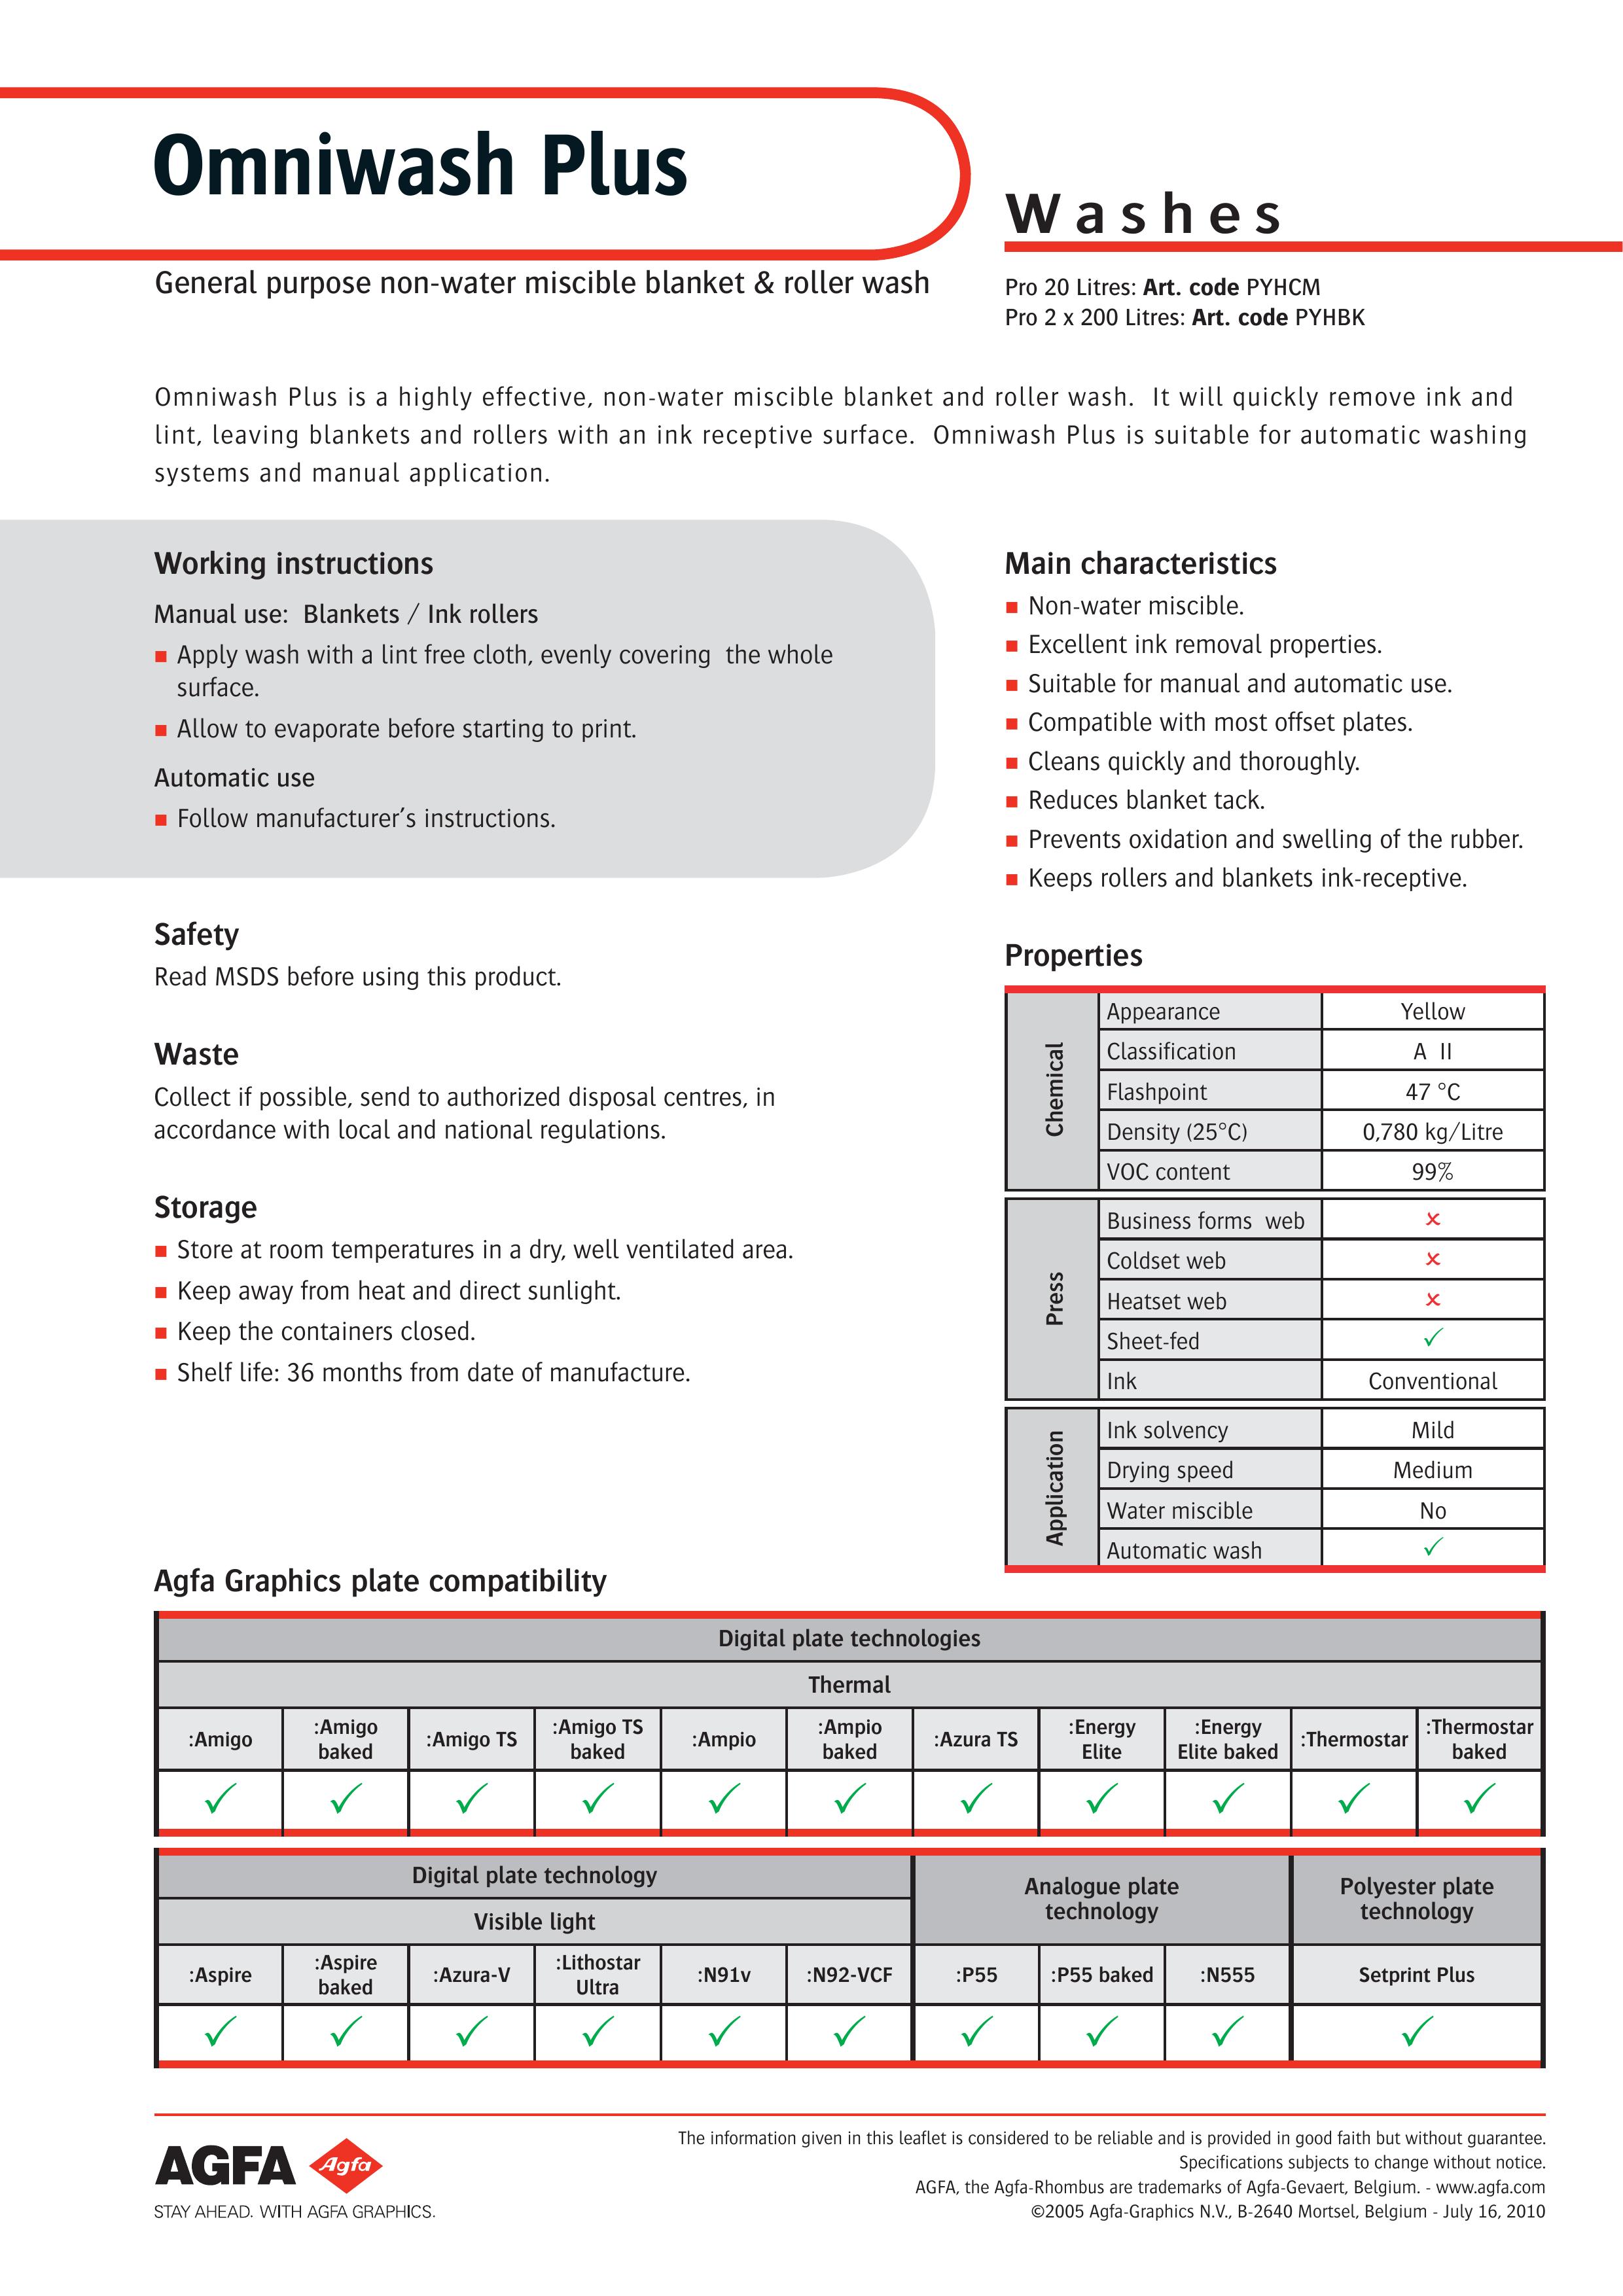 AGFA PYHCM Washer User Manual (Page 1)